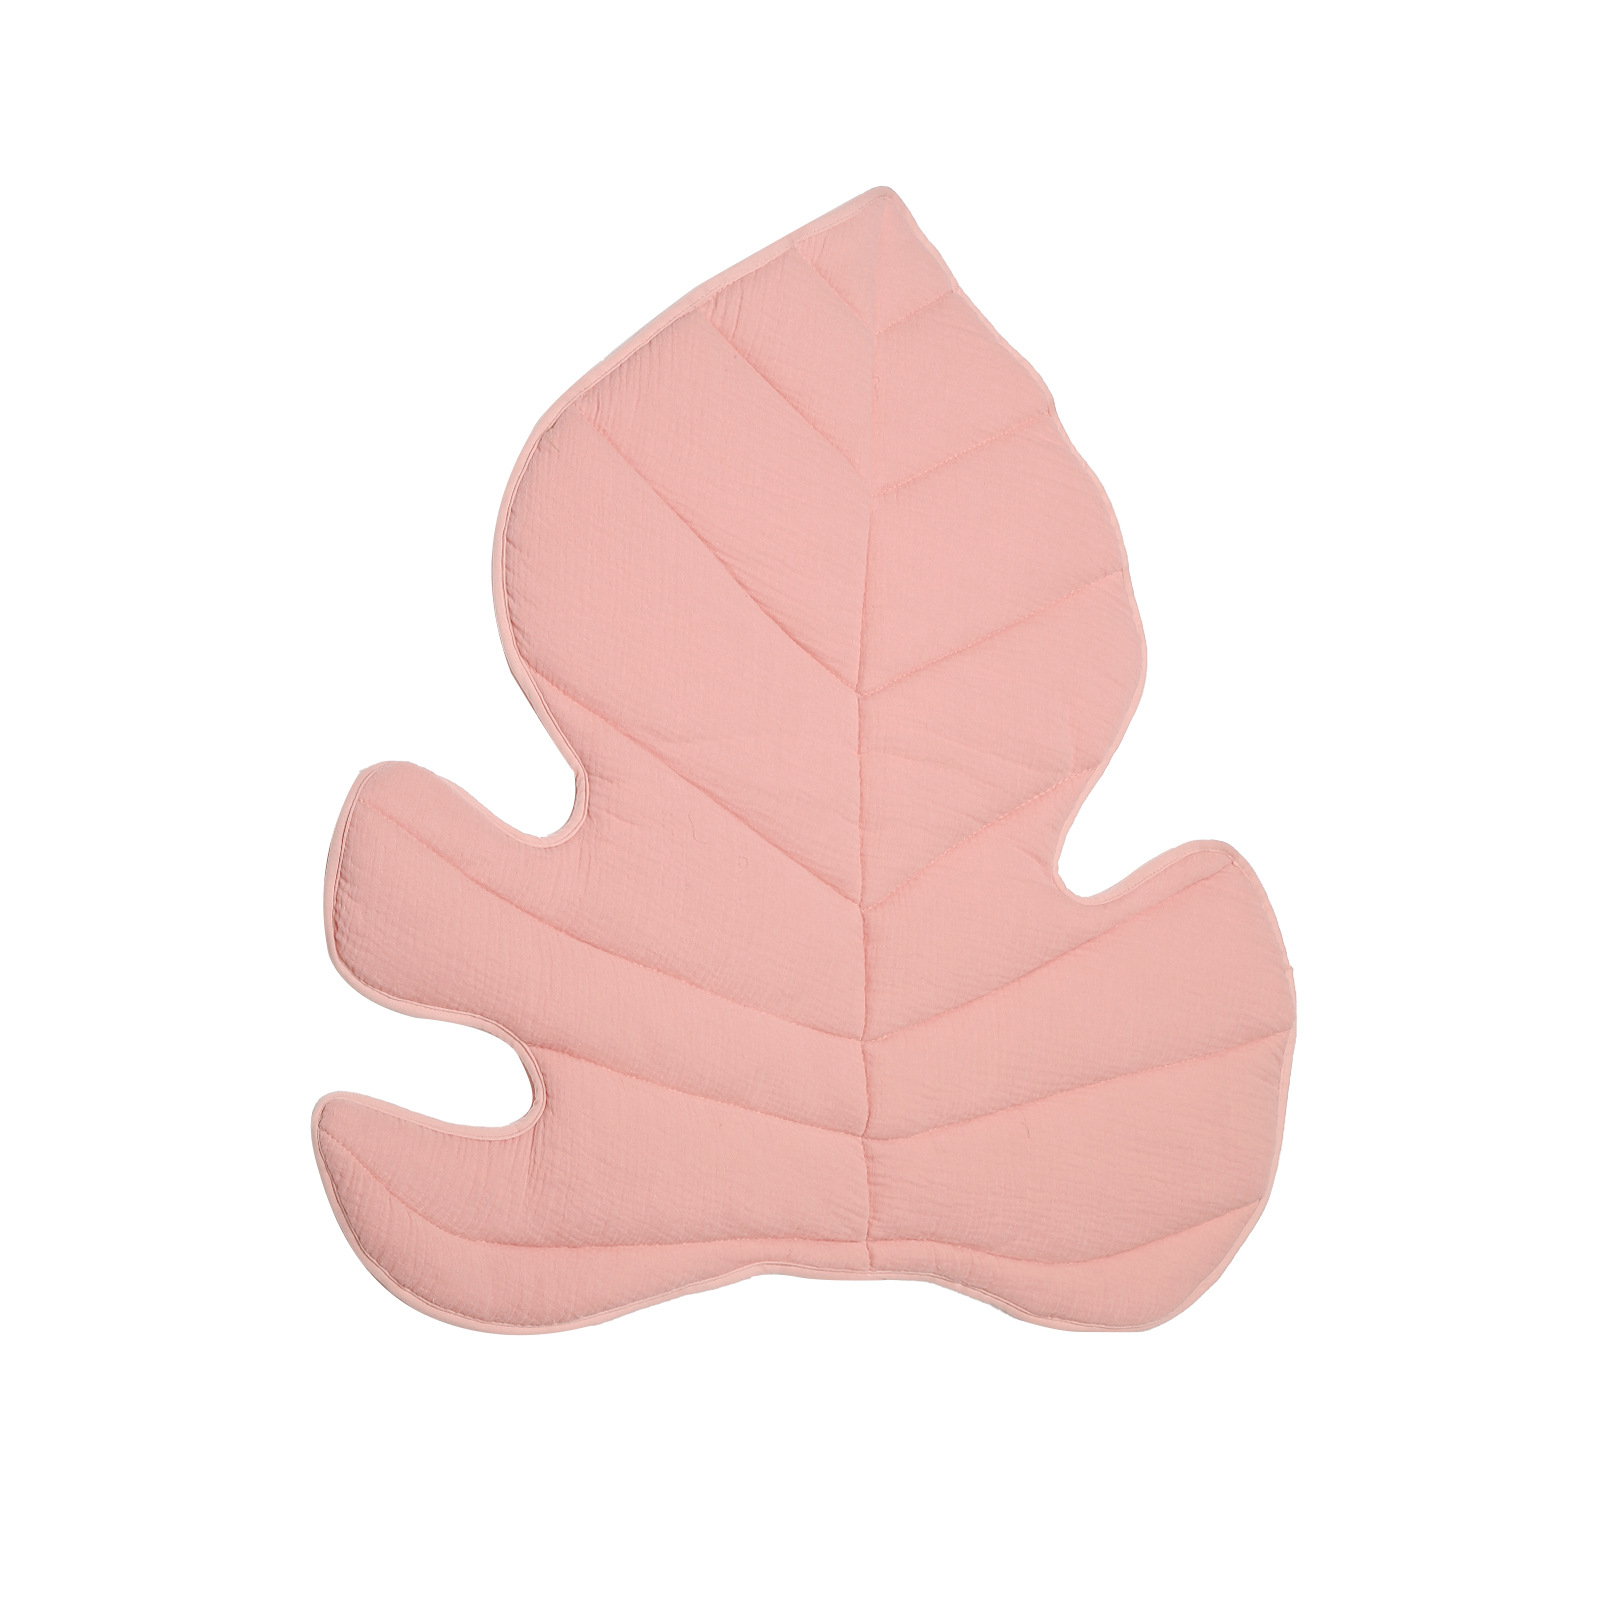 Turtle back leaf cushion, pink